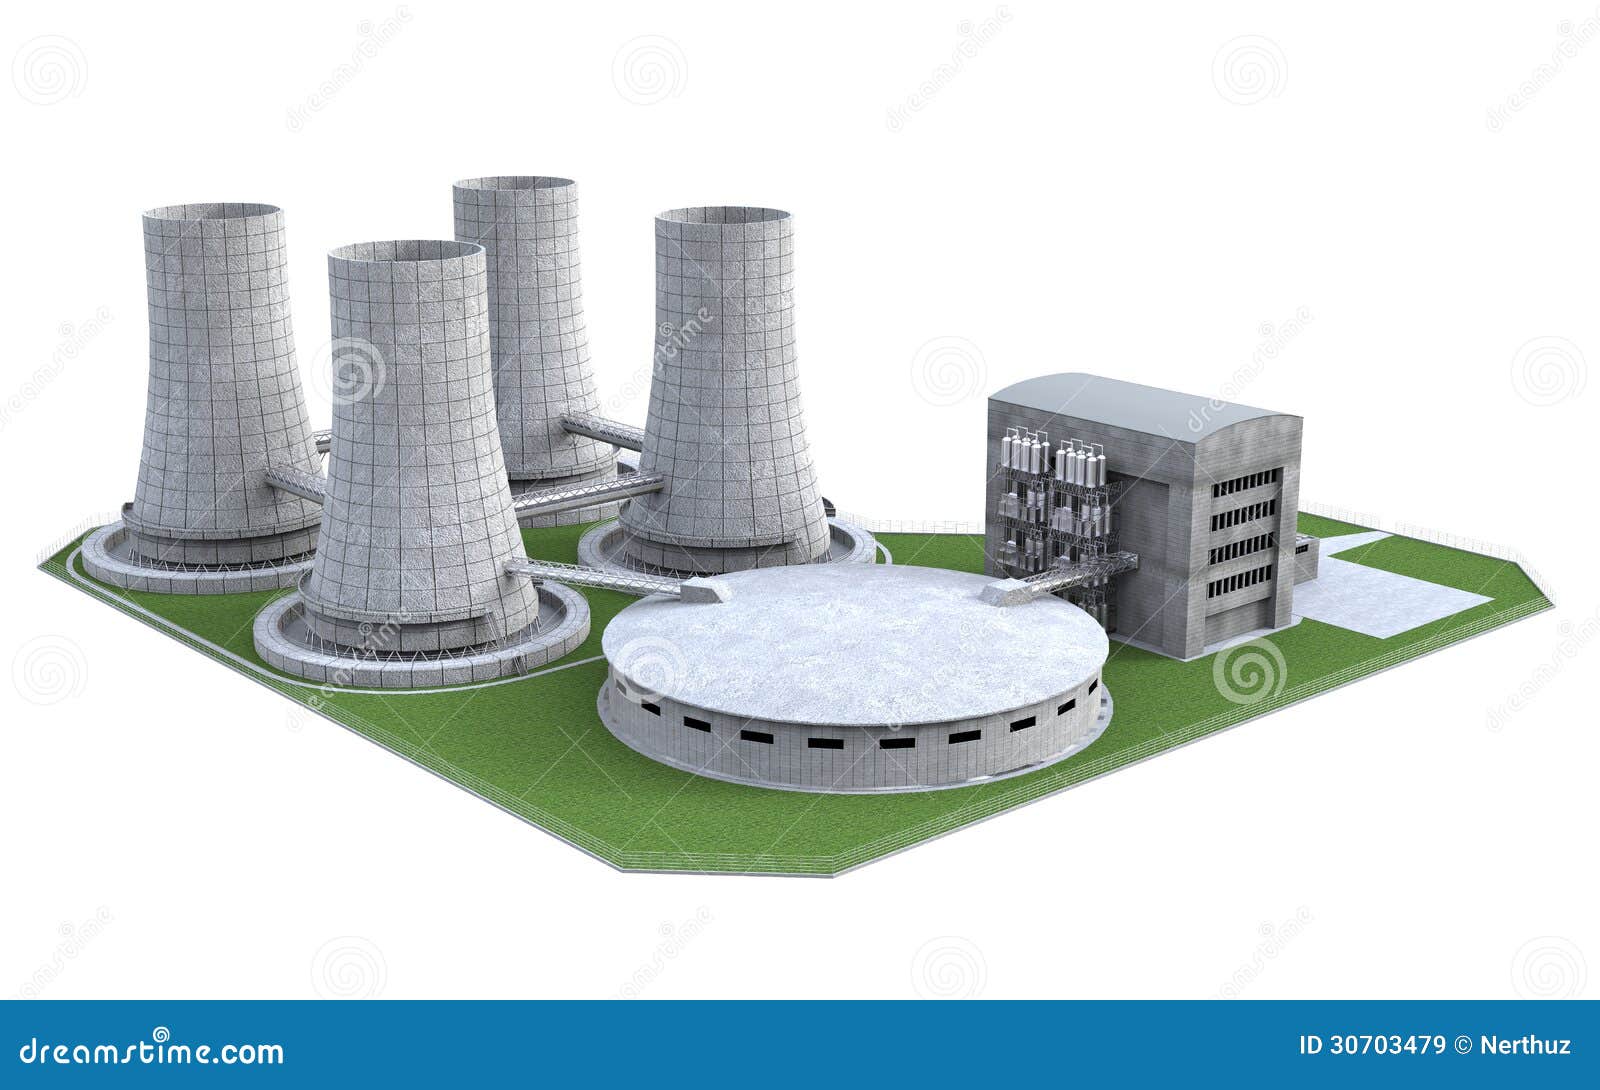 power plant clipart - photo #30